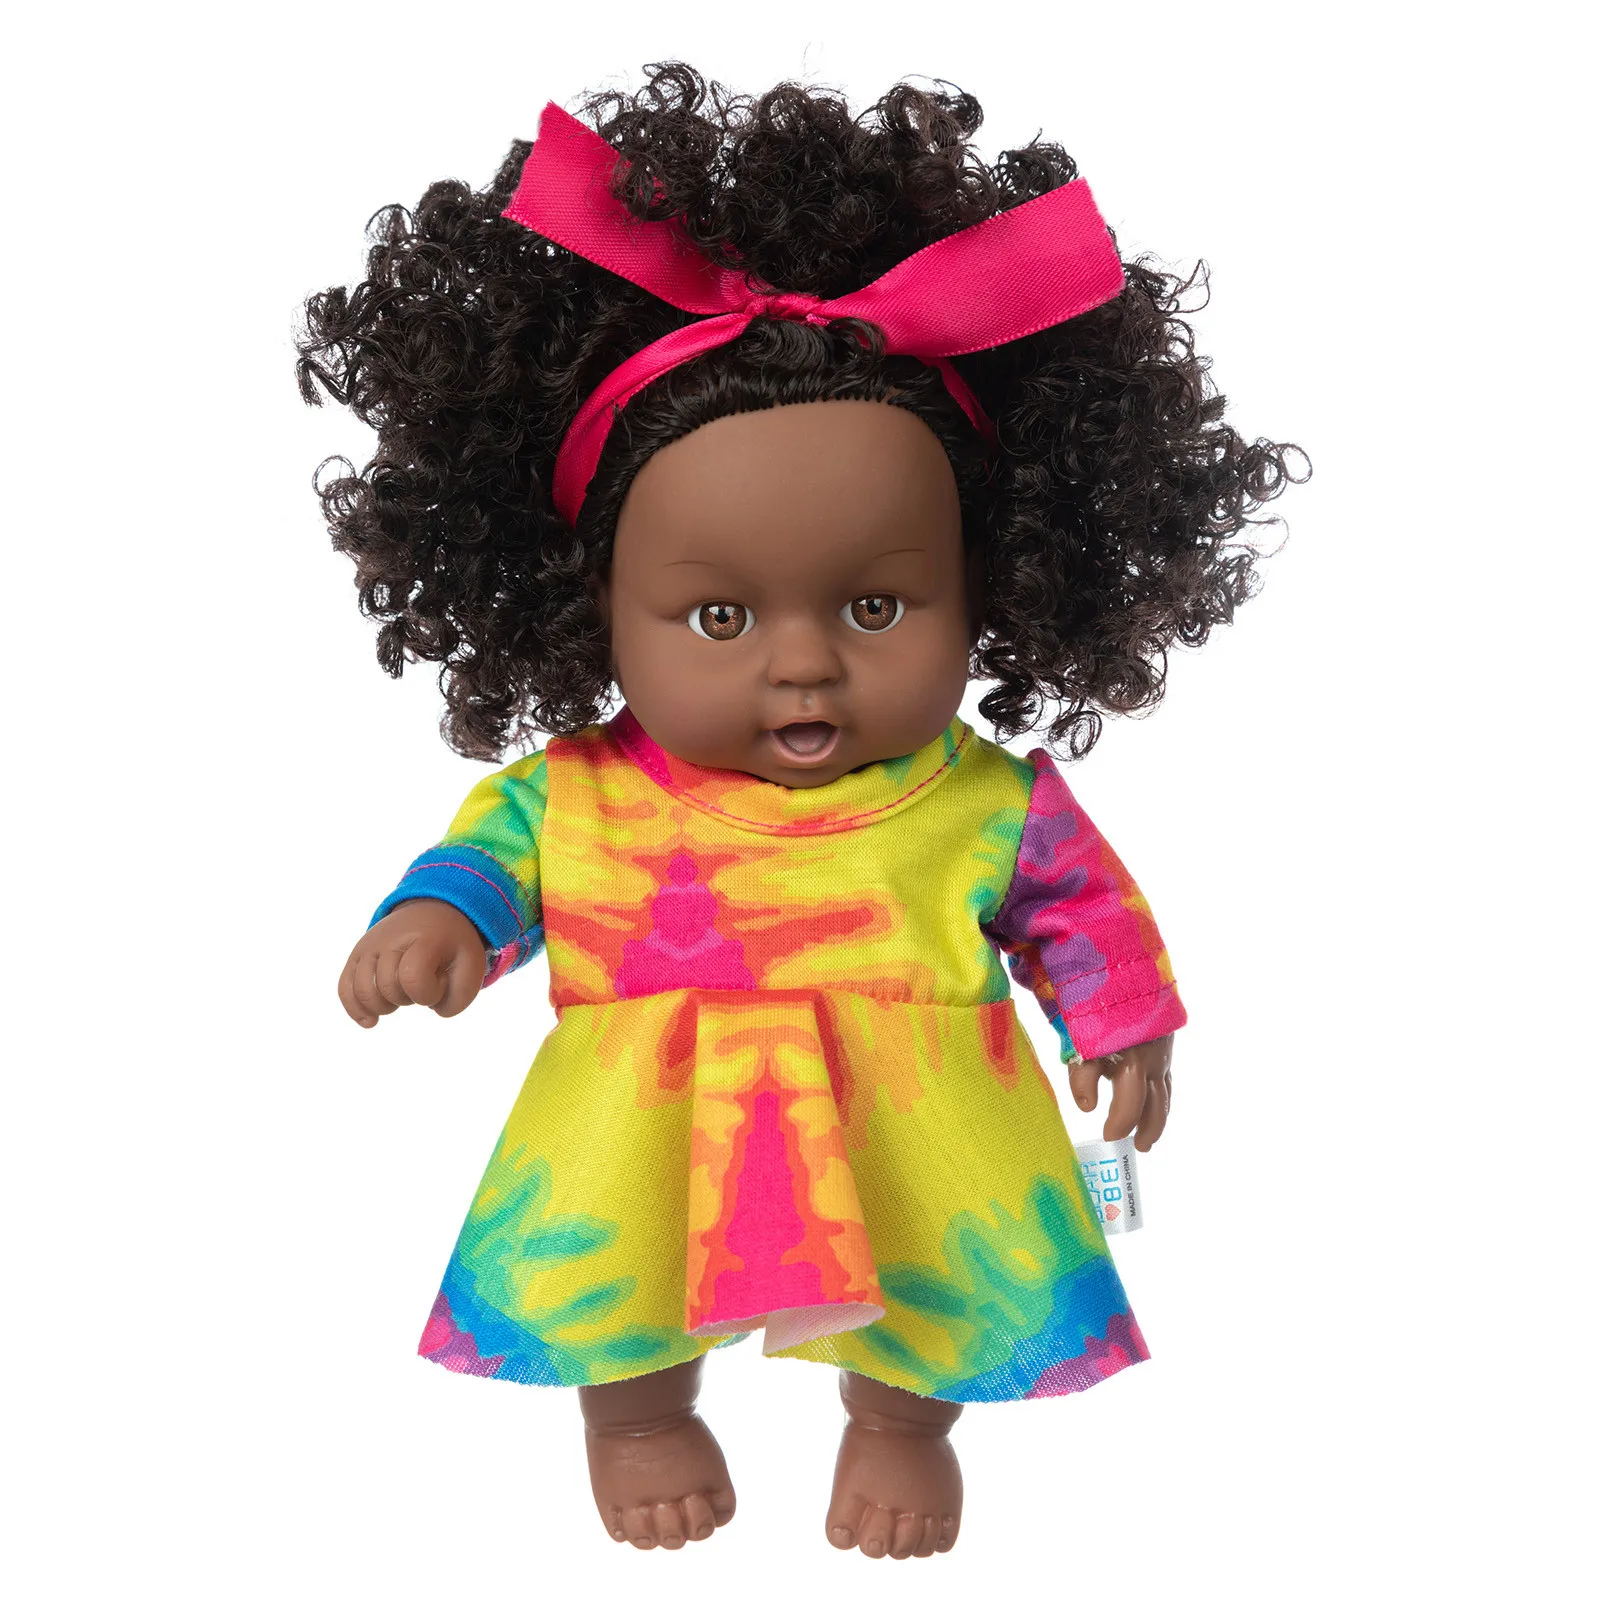 Dolls For Children Black African Baby Girls Cute Curly 8-Inch Vinyl Toys 2021 New zabawki dla dzieci Apr1 | Игрушки и хобби